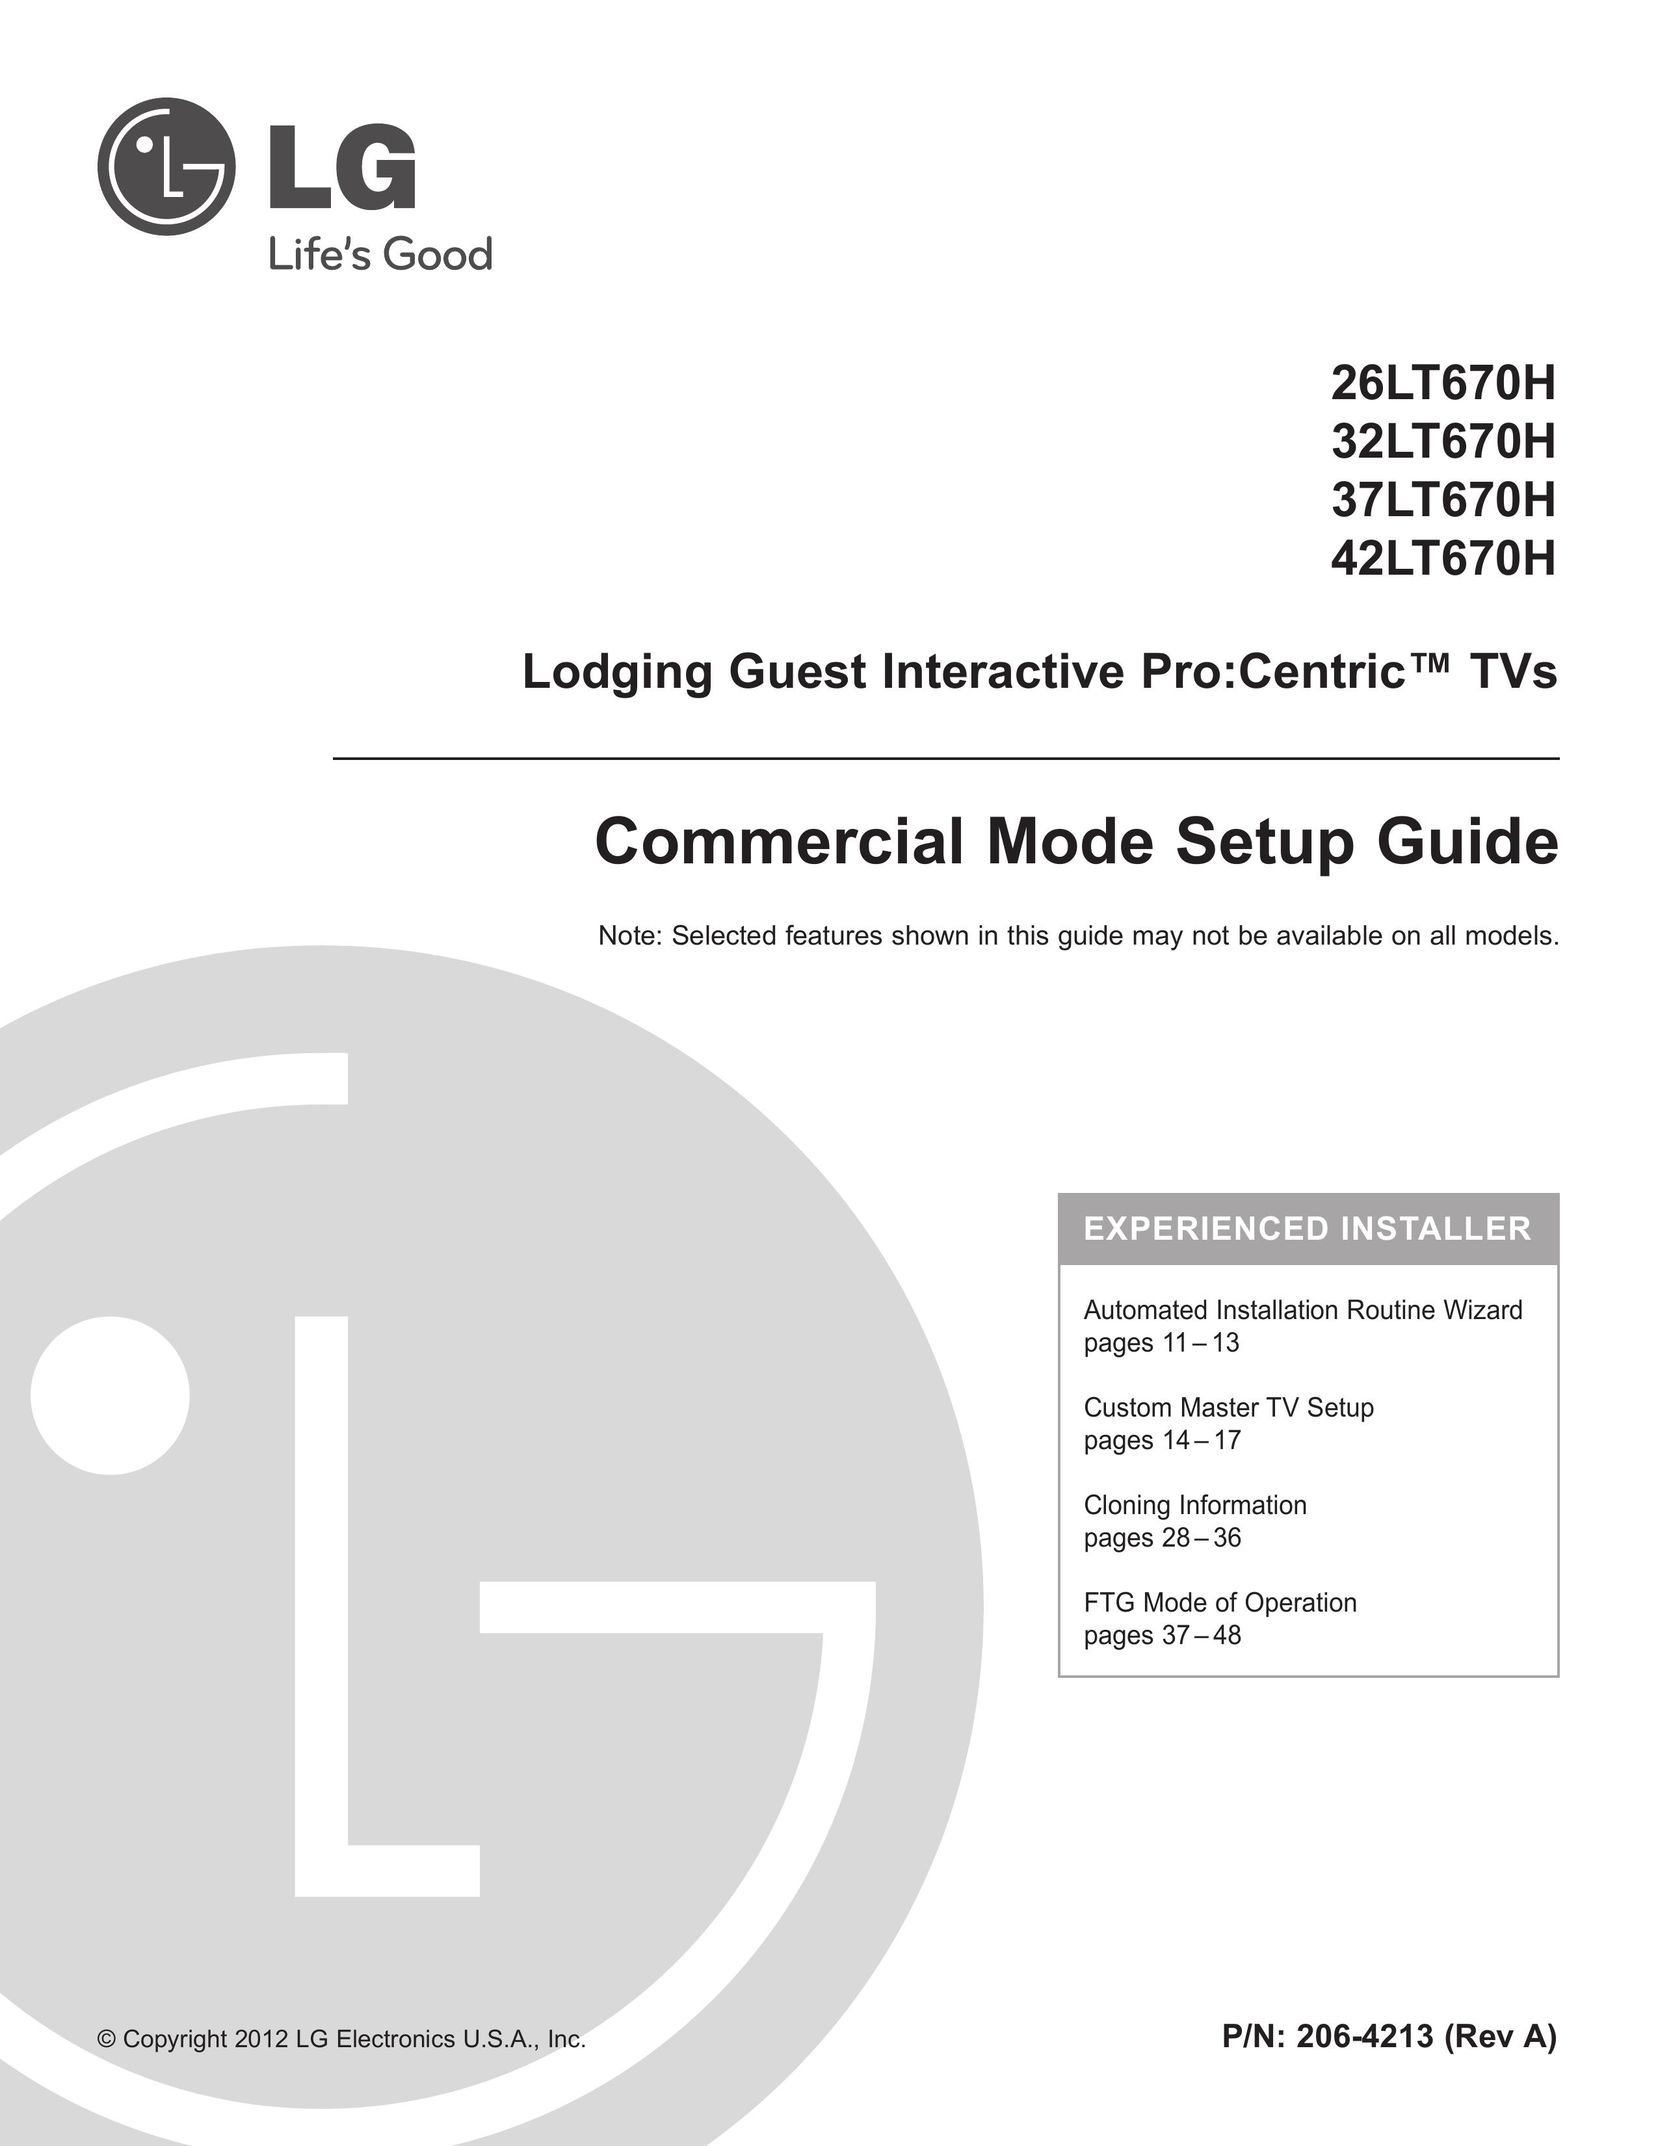 LG Electronics 42LT670H Model Vehicle User Manual (Page 1)